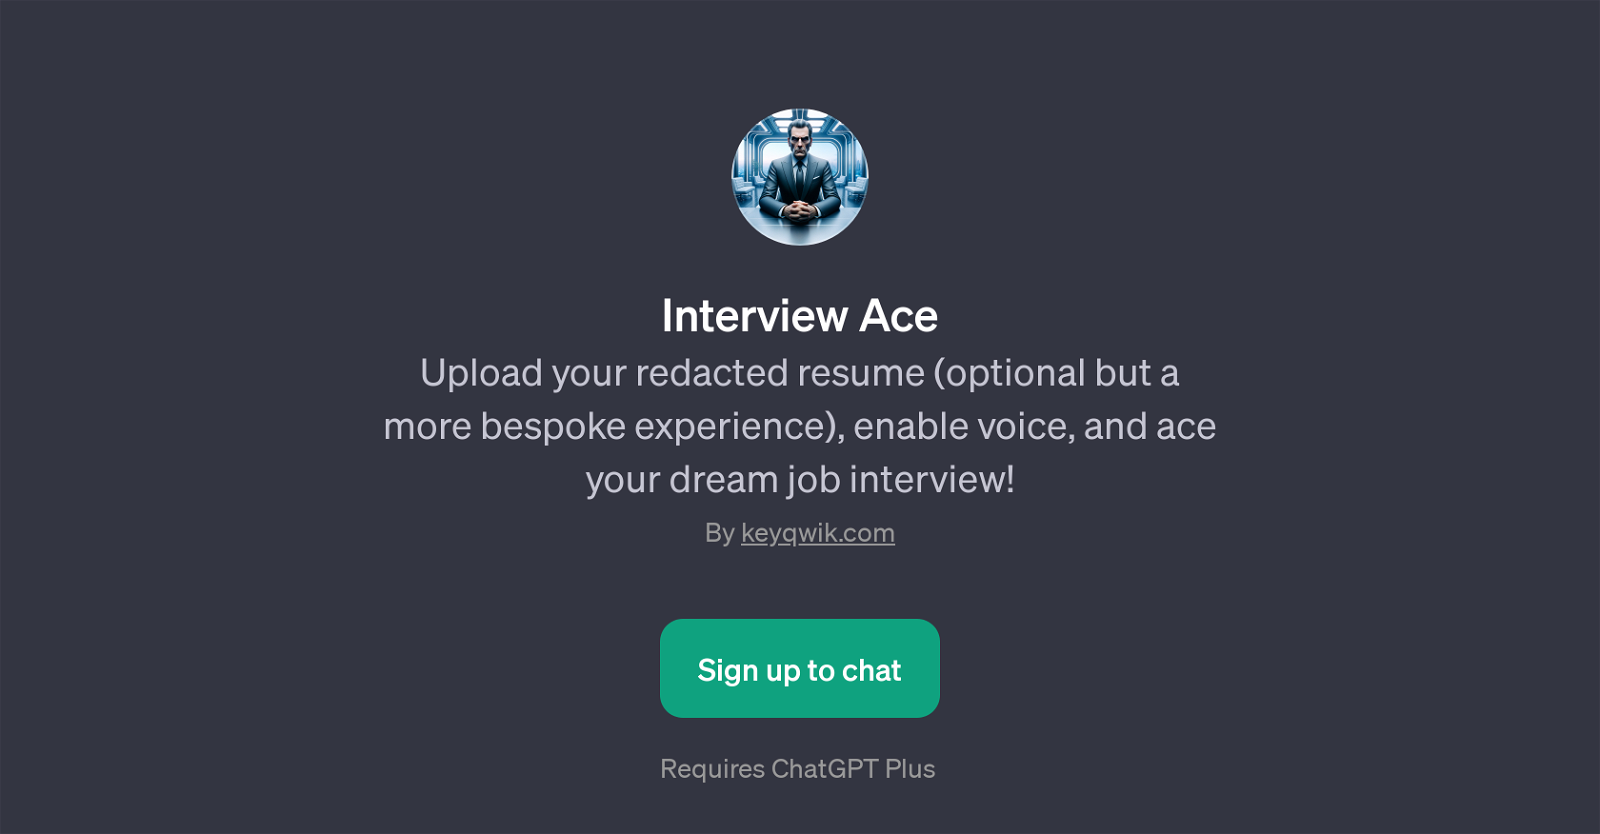 Interview Ace website